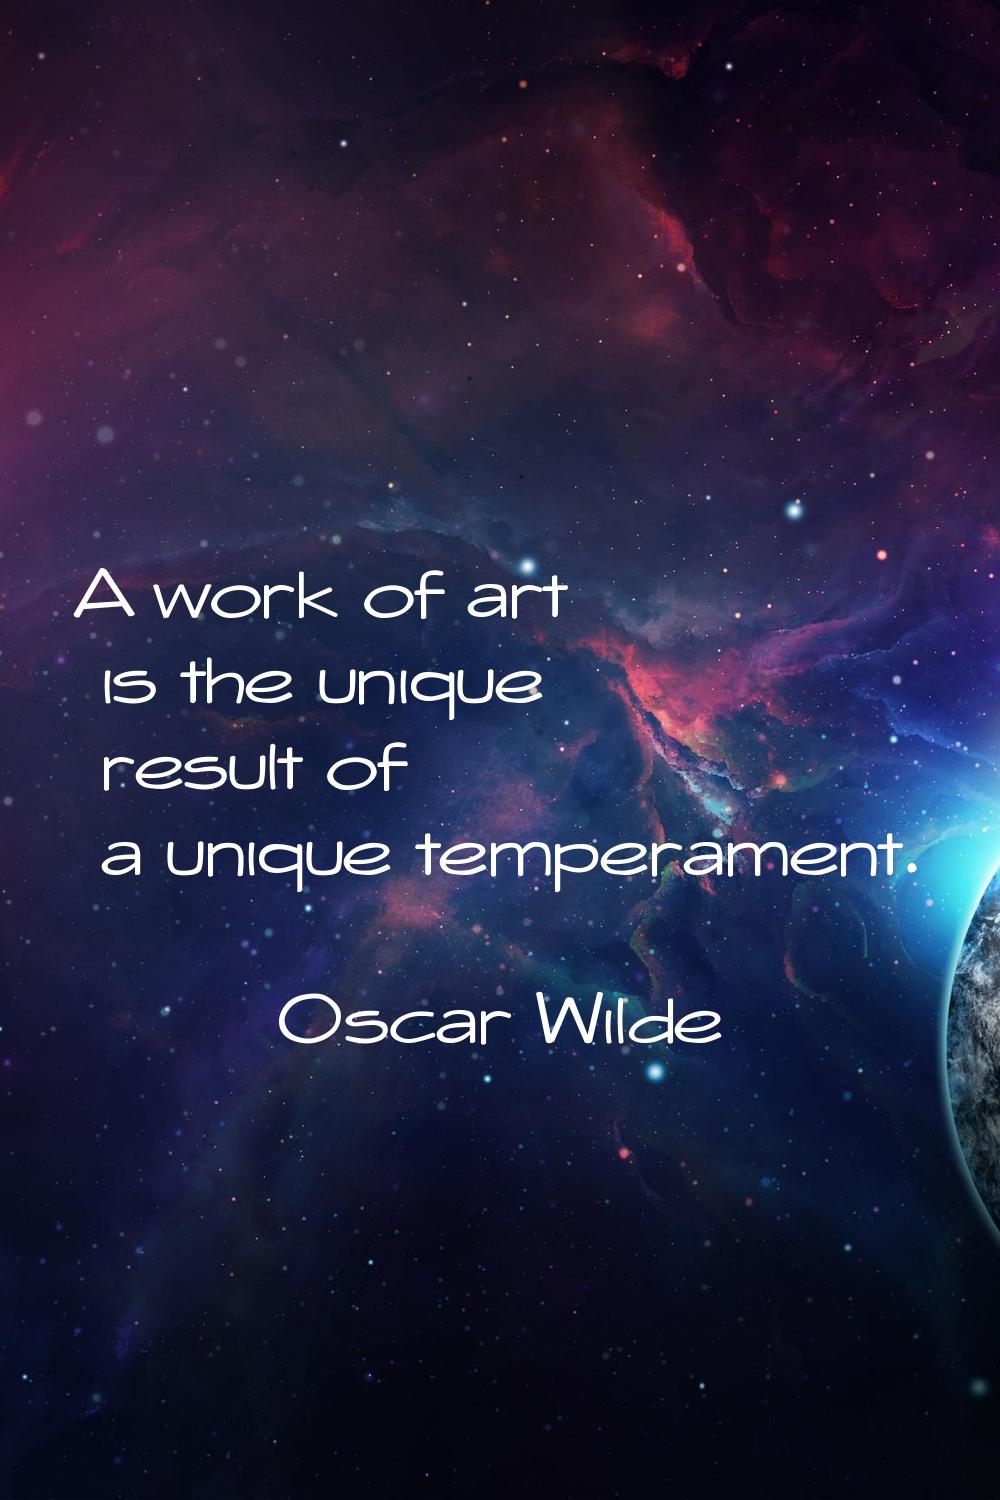 A work of art is the unique result of a unique temperament.